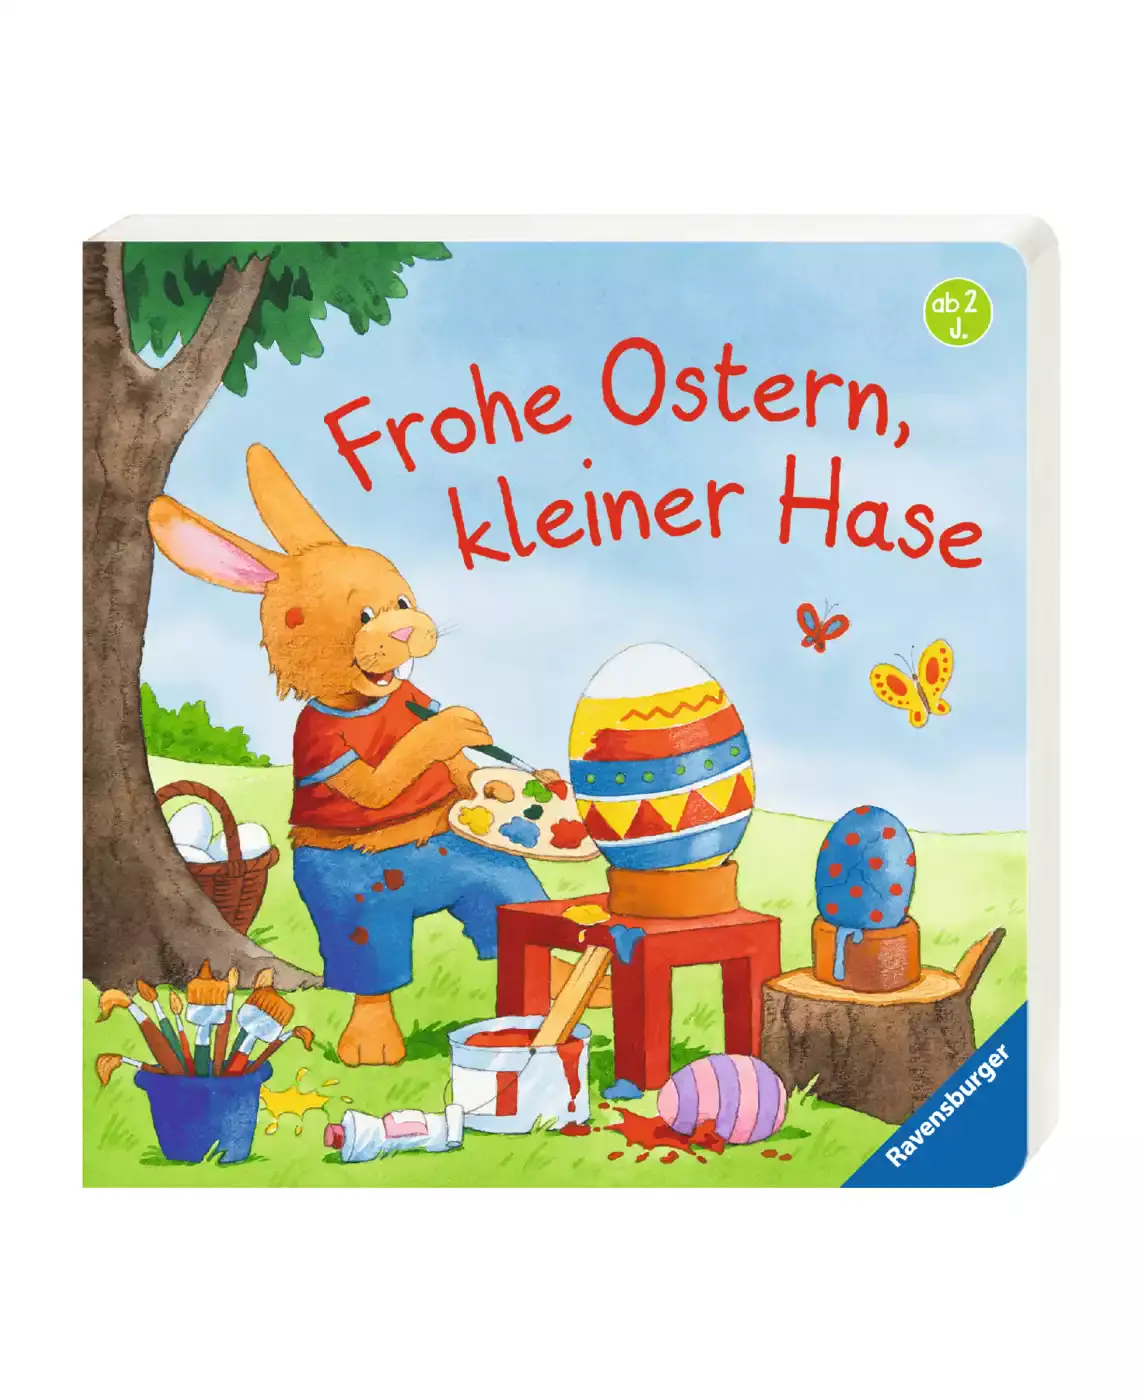 Frohe Ostern, kleiner Hase Ravensburger 2000573374407 3